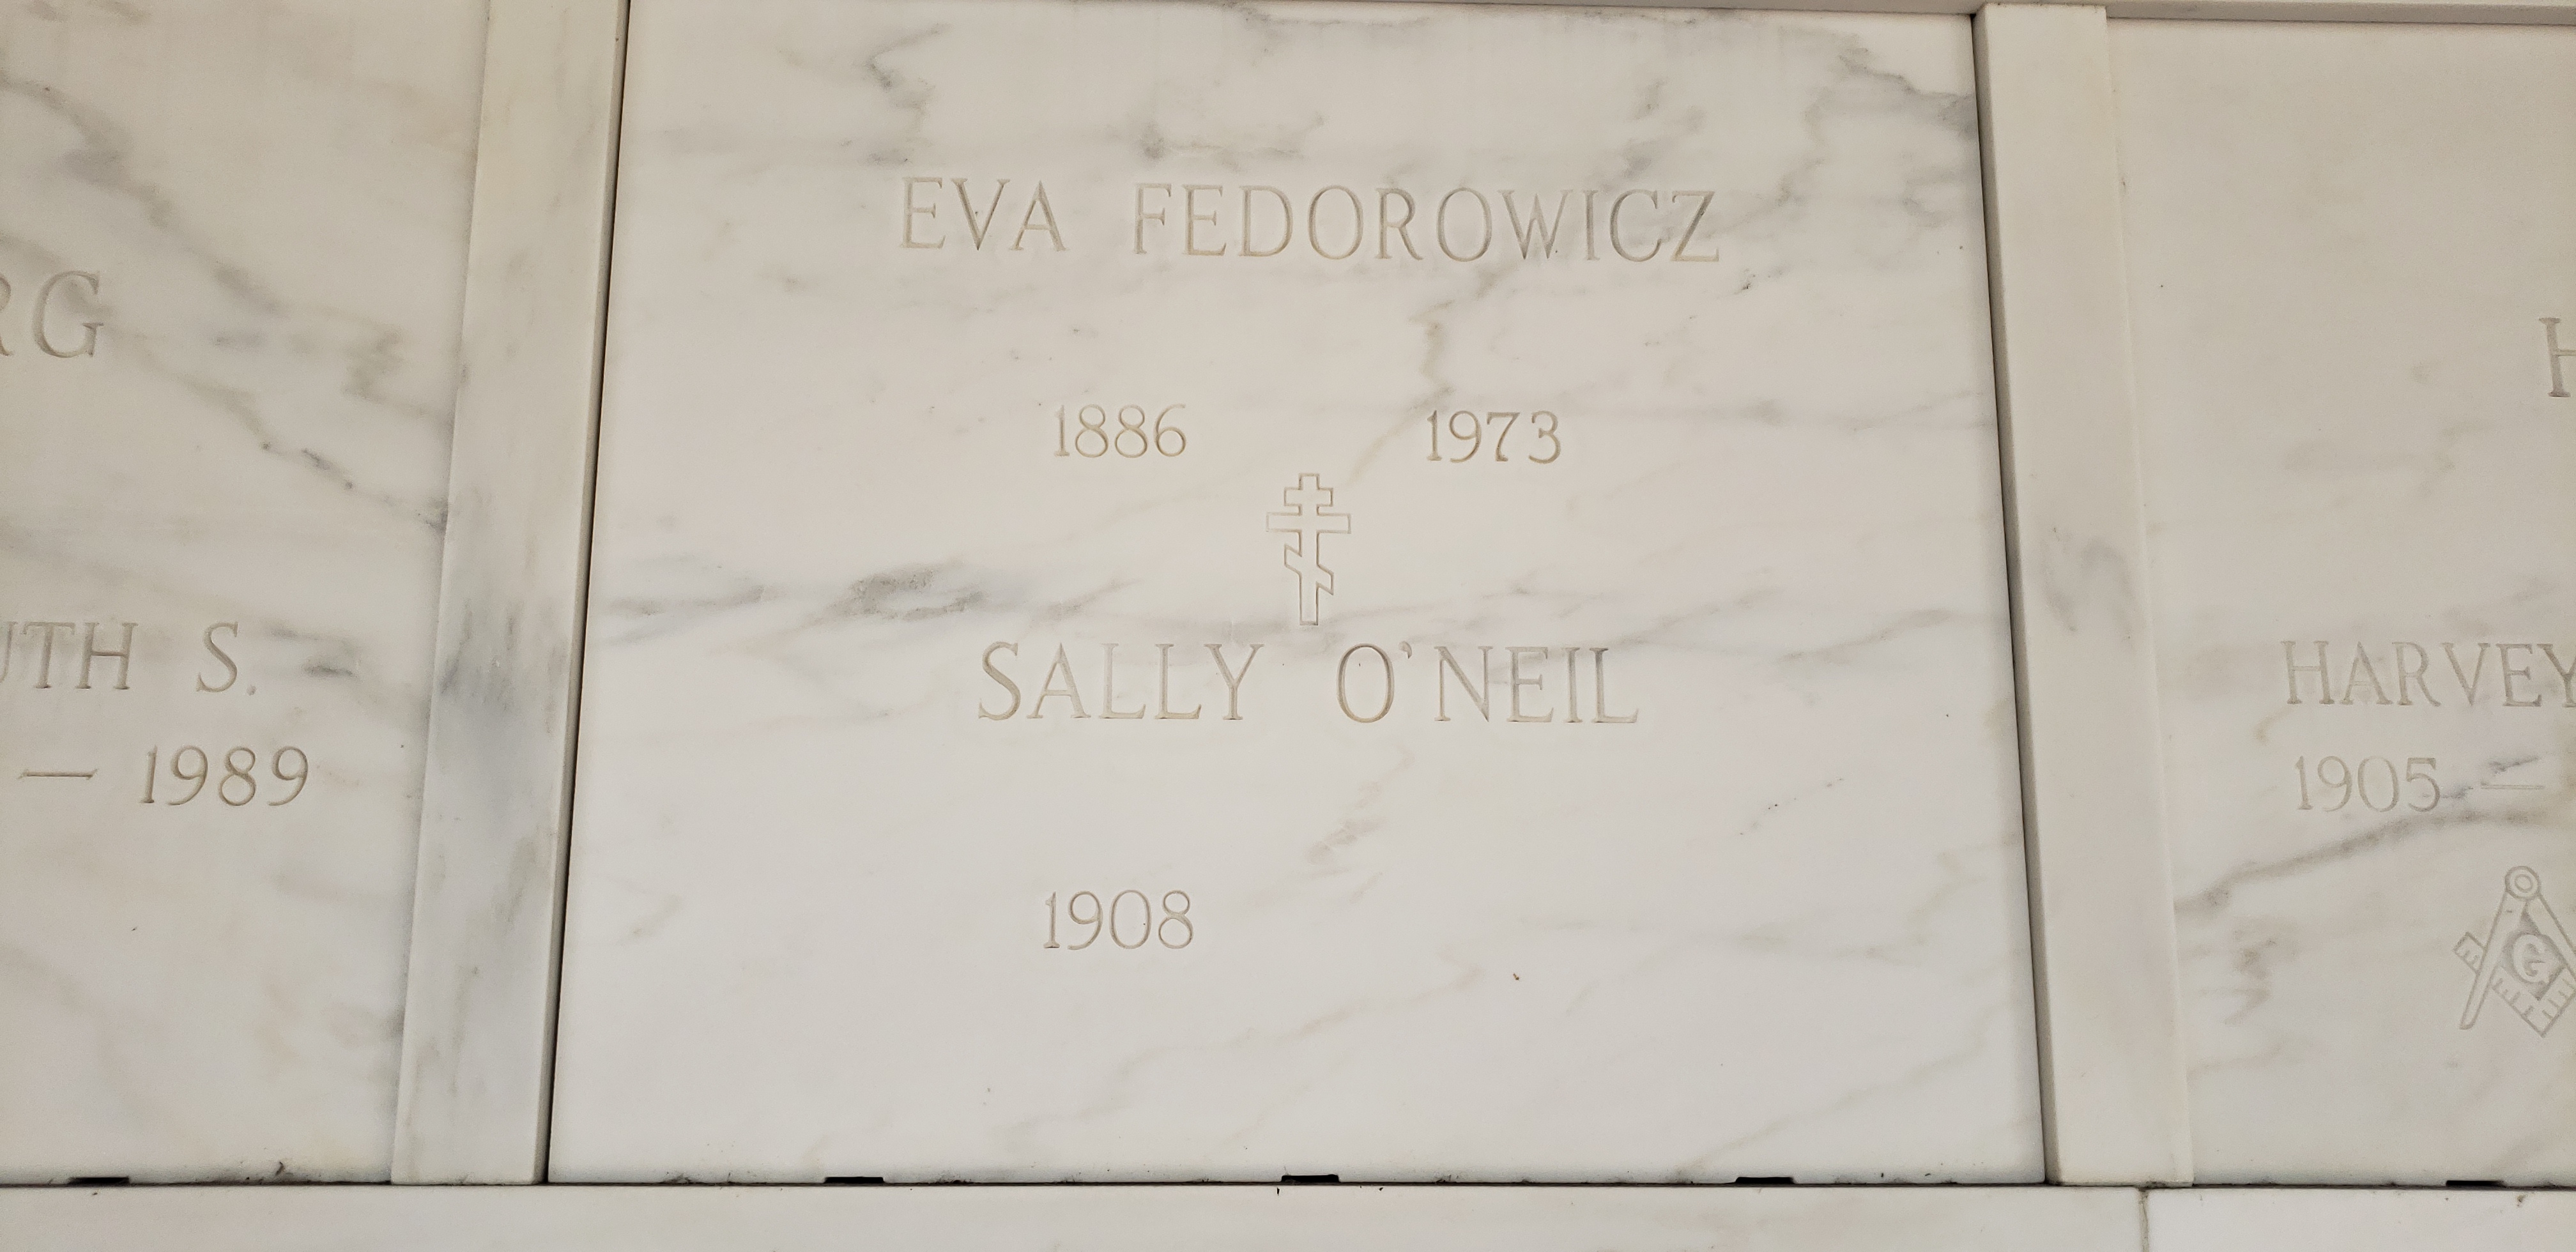 Eva Fedorowicz